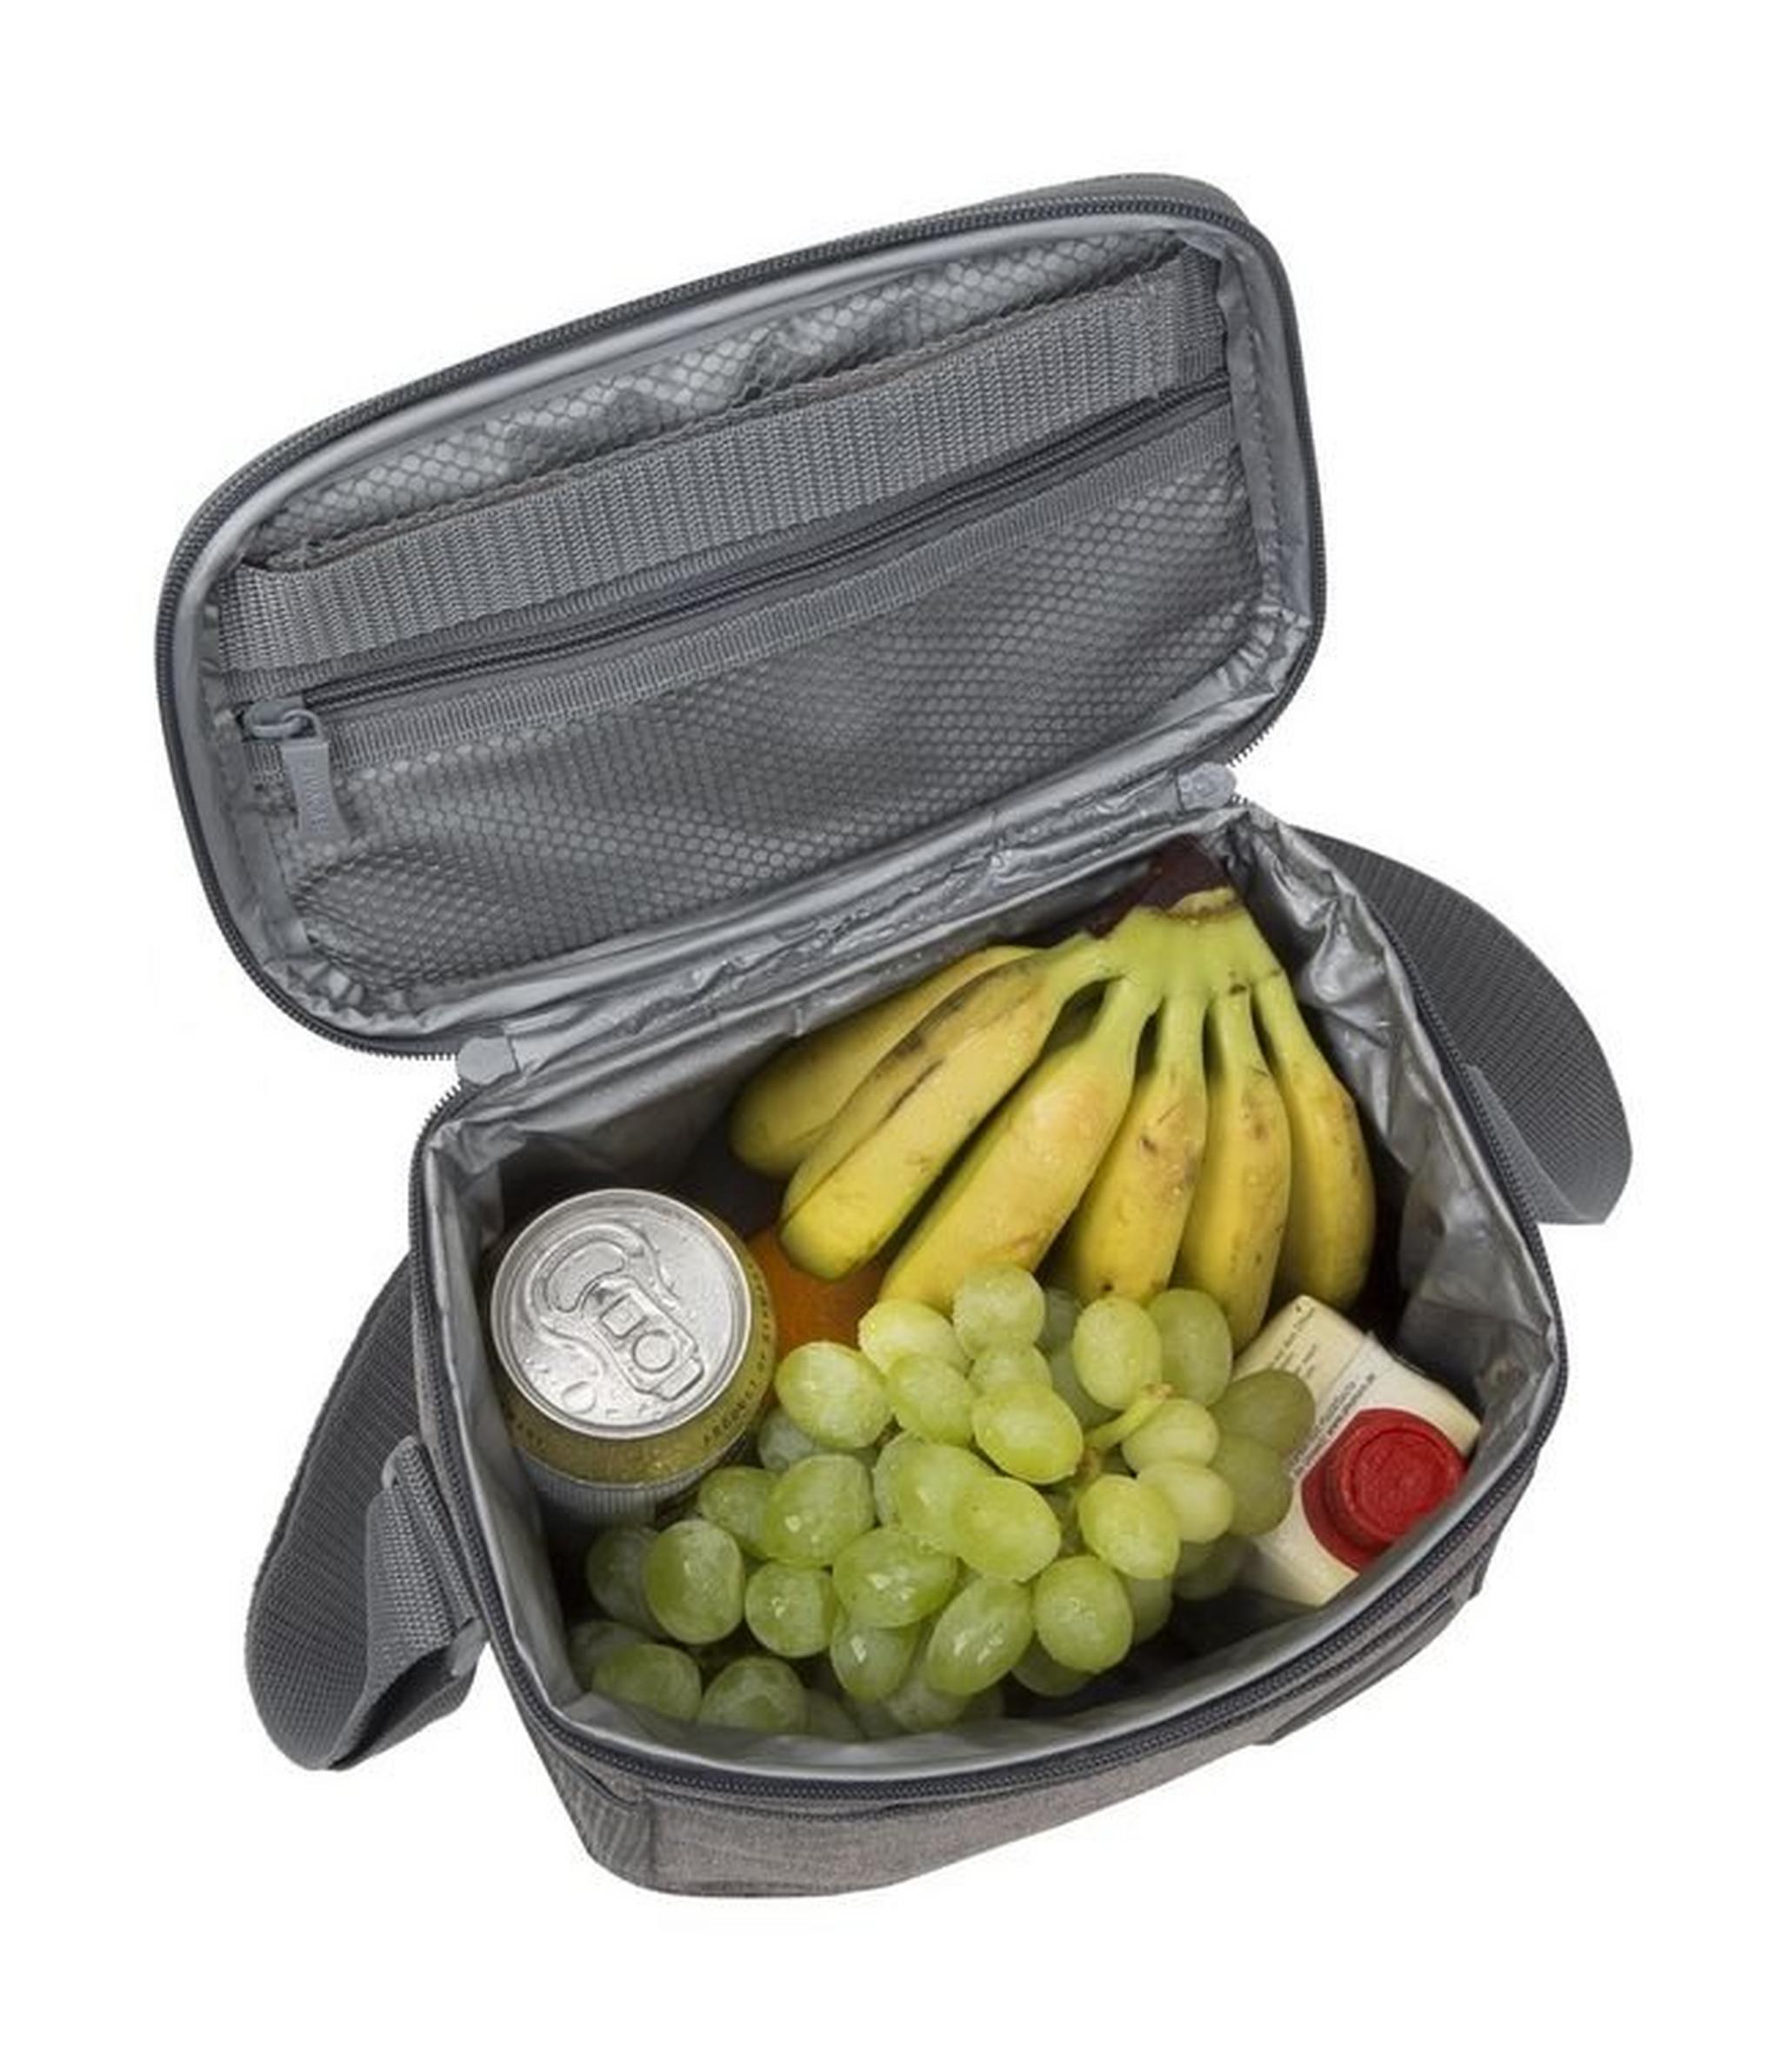 RivaCase 5.5L Cooler Bag (5706) - Grey